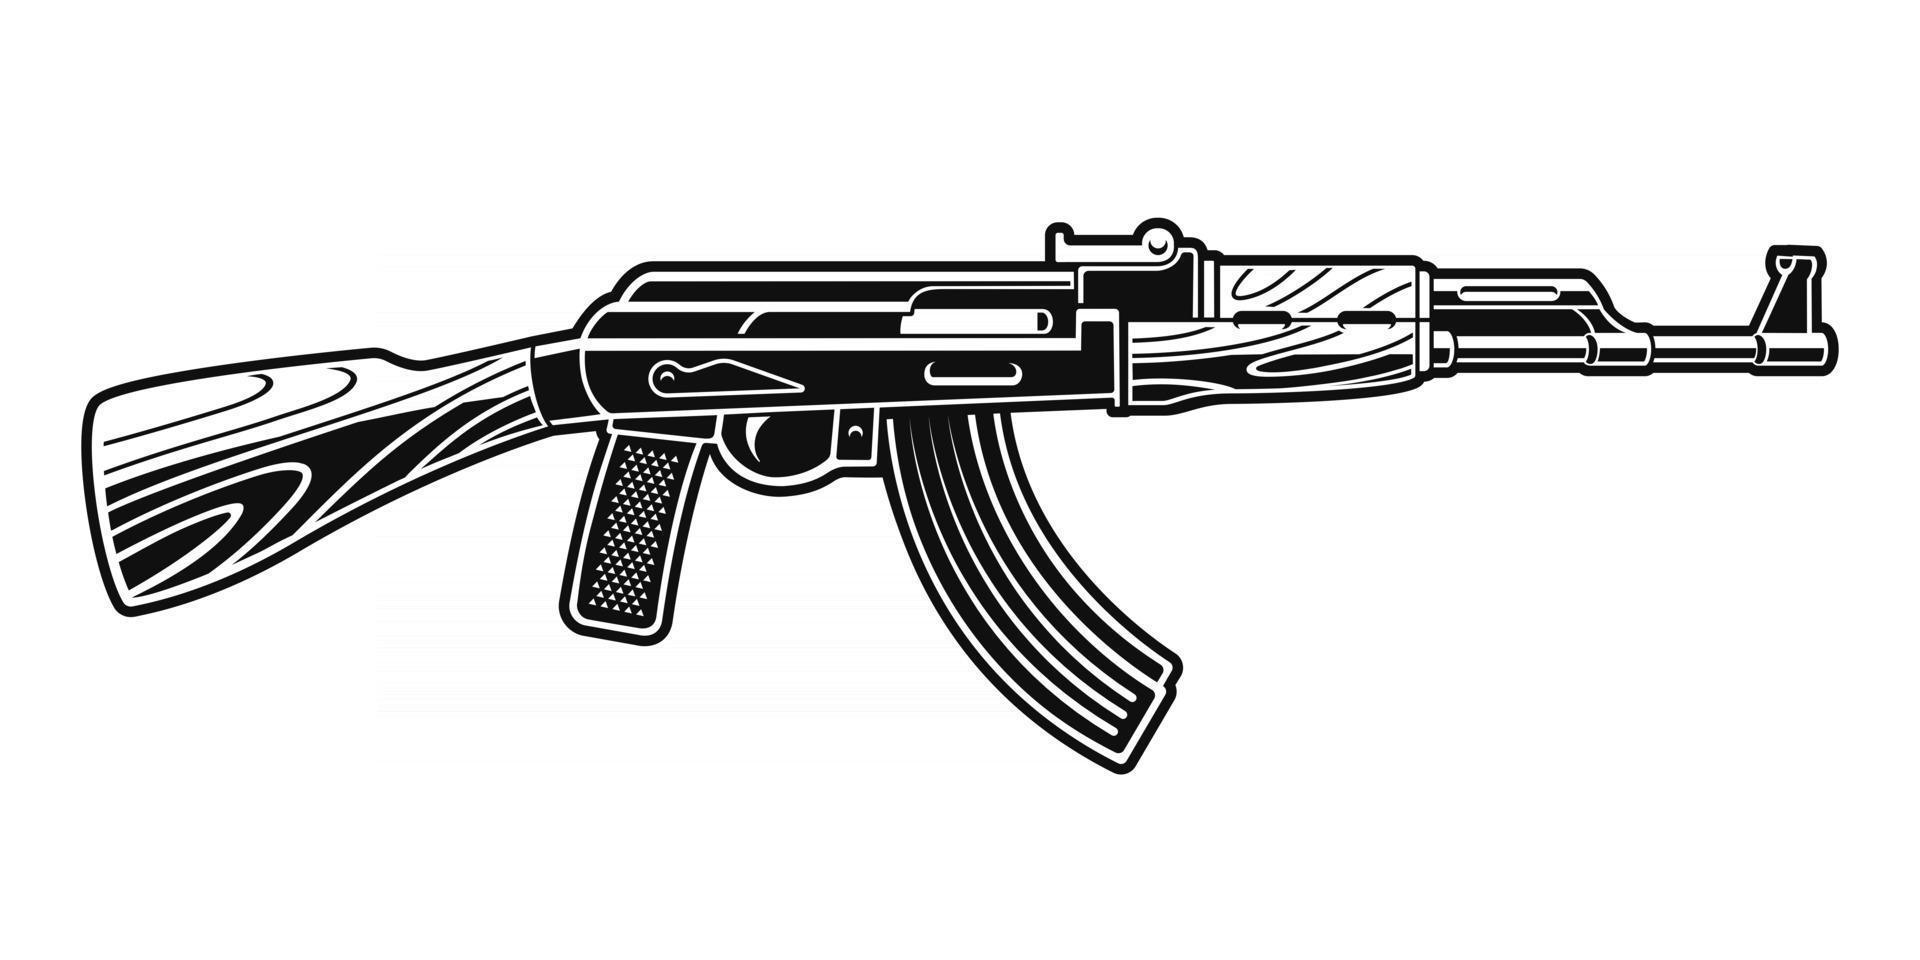 en svartvit vektorillustration av ett AK 47-gevär. vektor